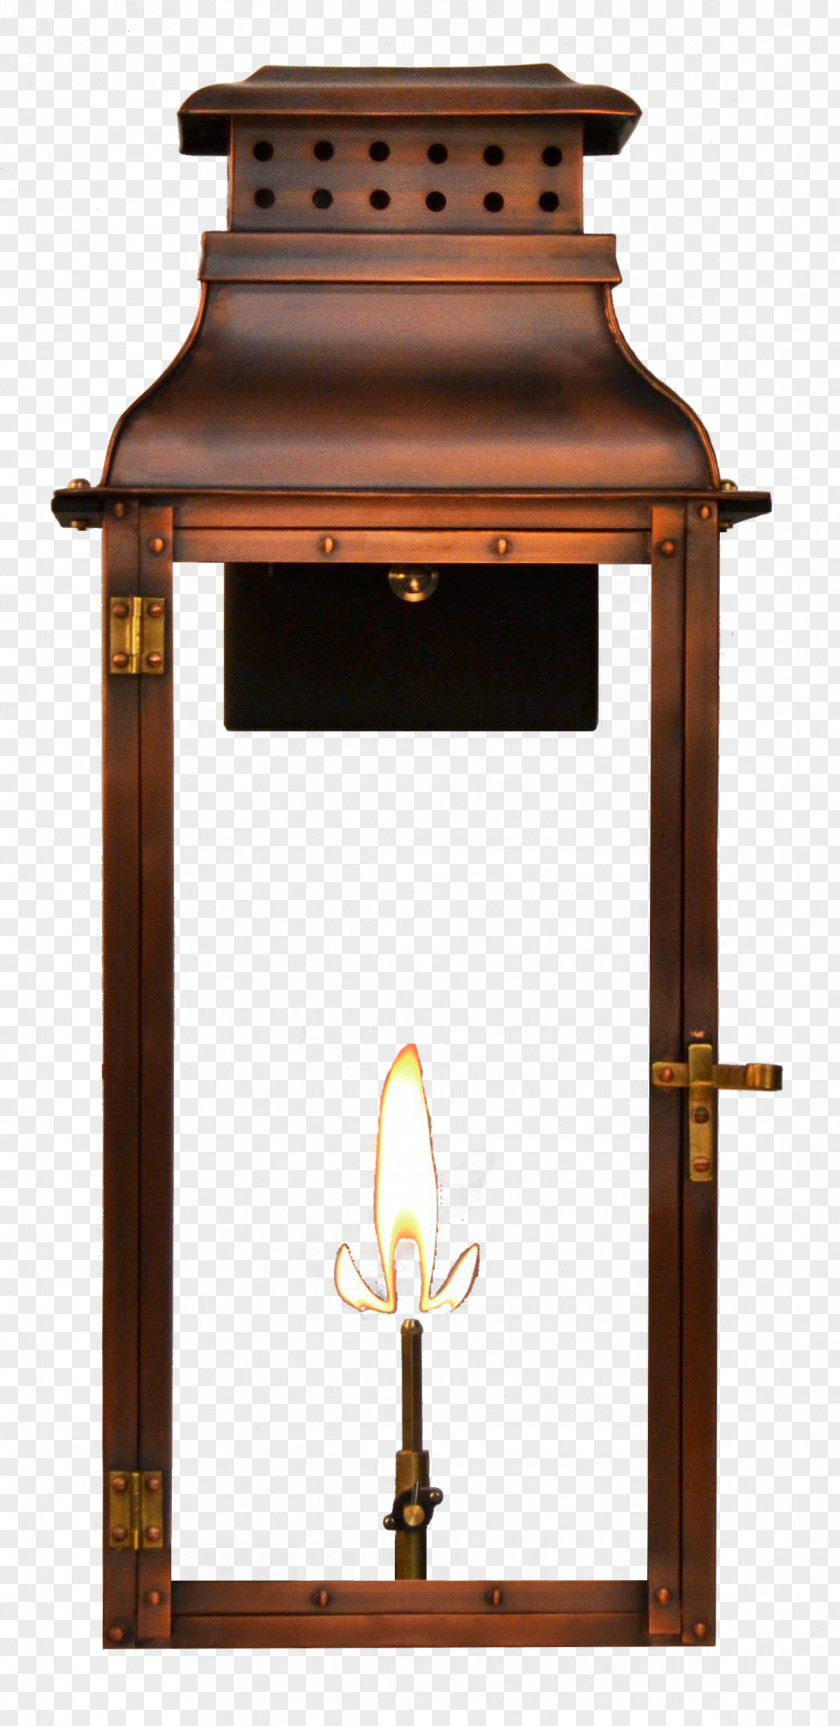 Tuscan Lighting Light Fixture Lantern Coppersmith PNG